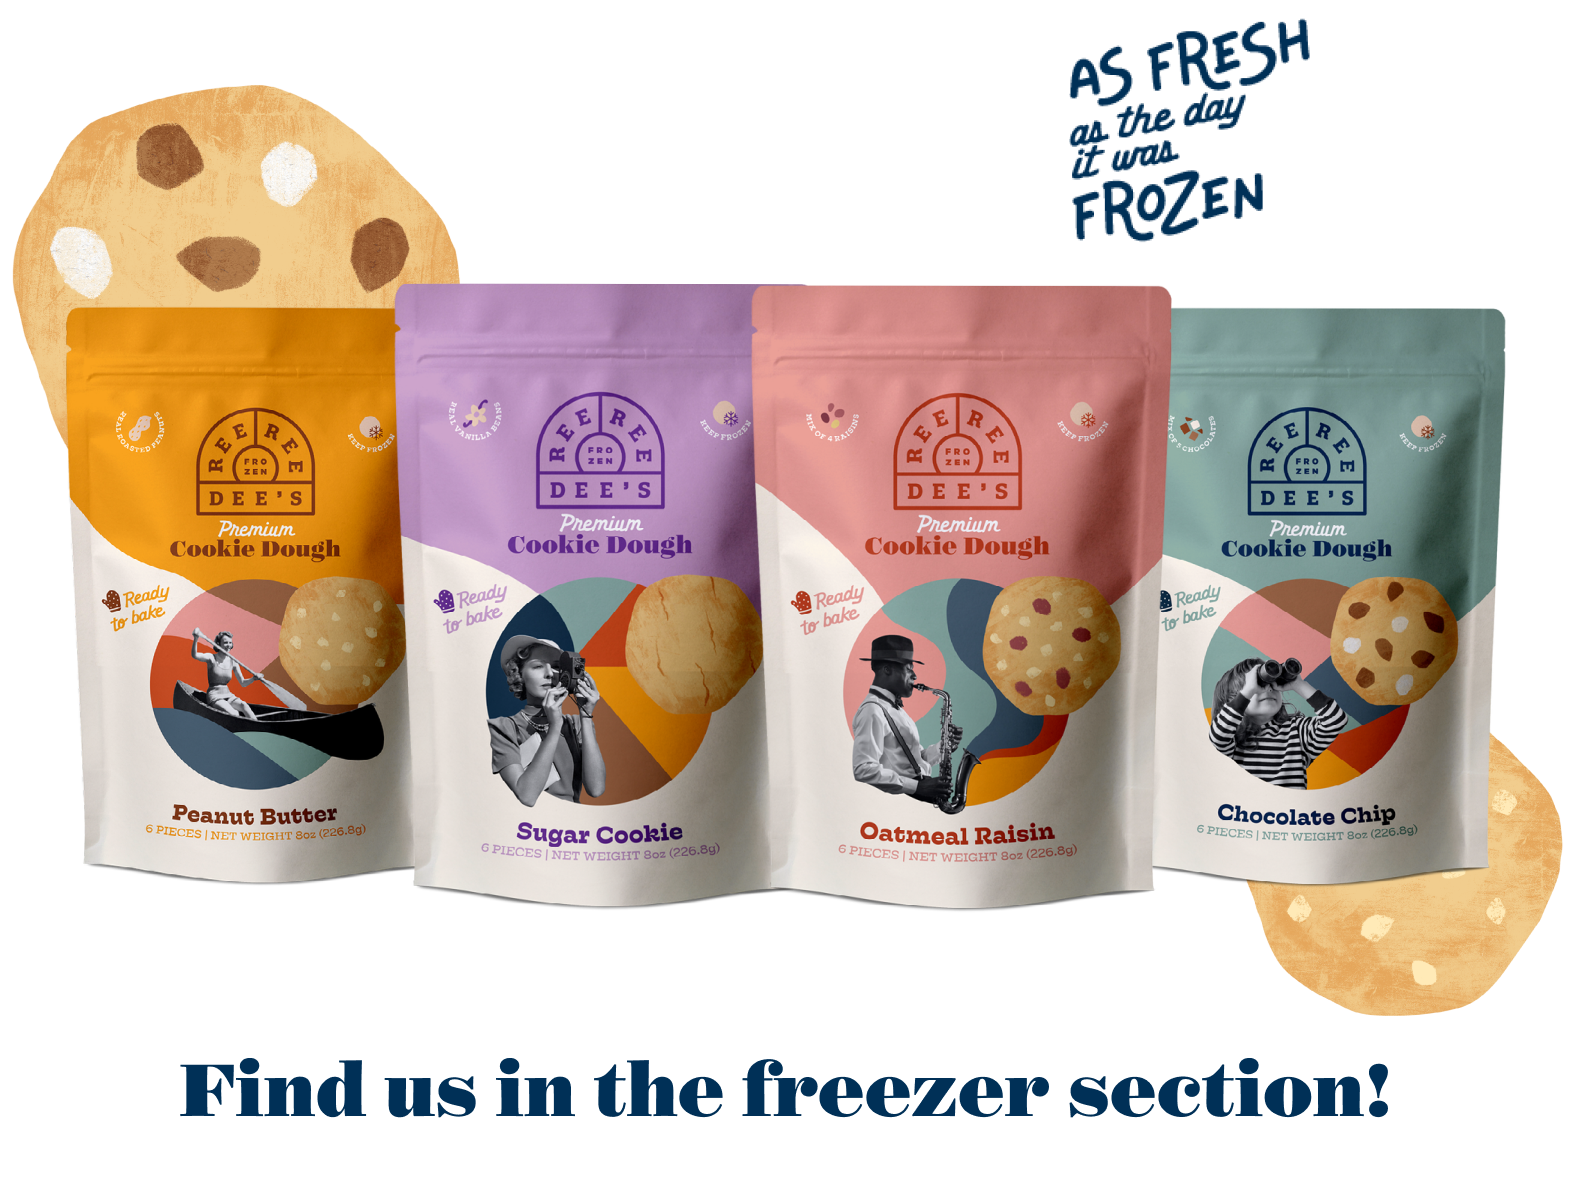 FREE Ree Ree Dee’s Frozen Cookie Dough